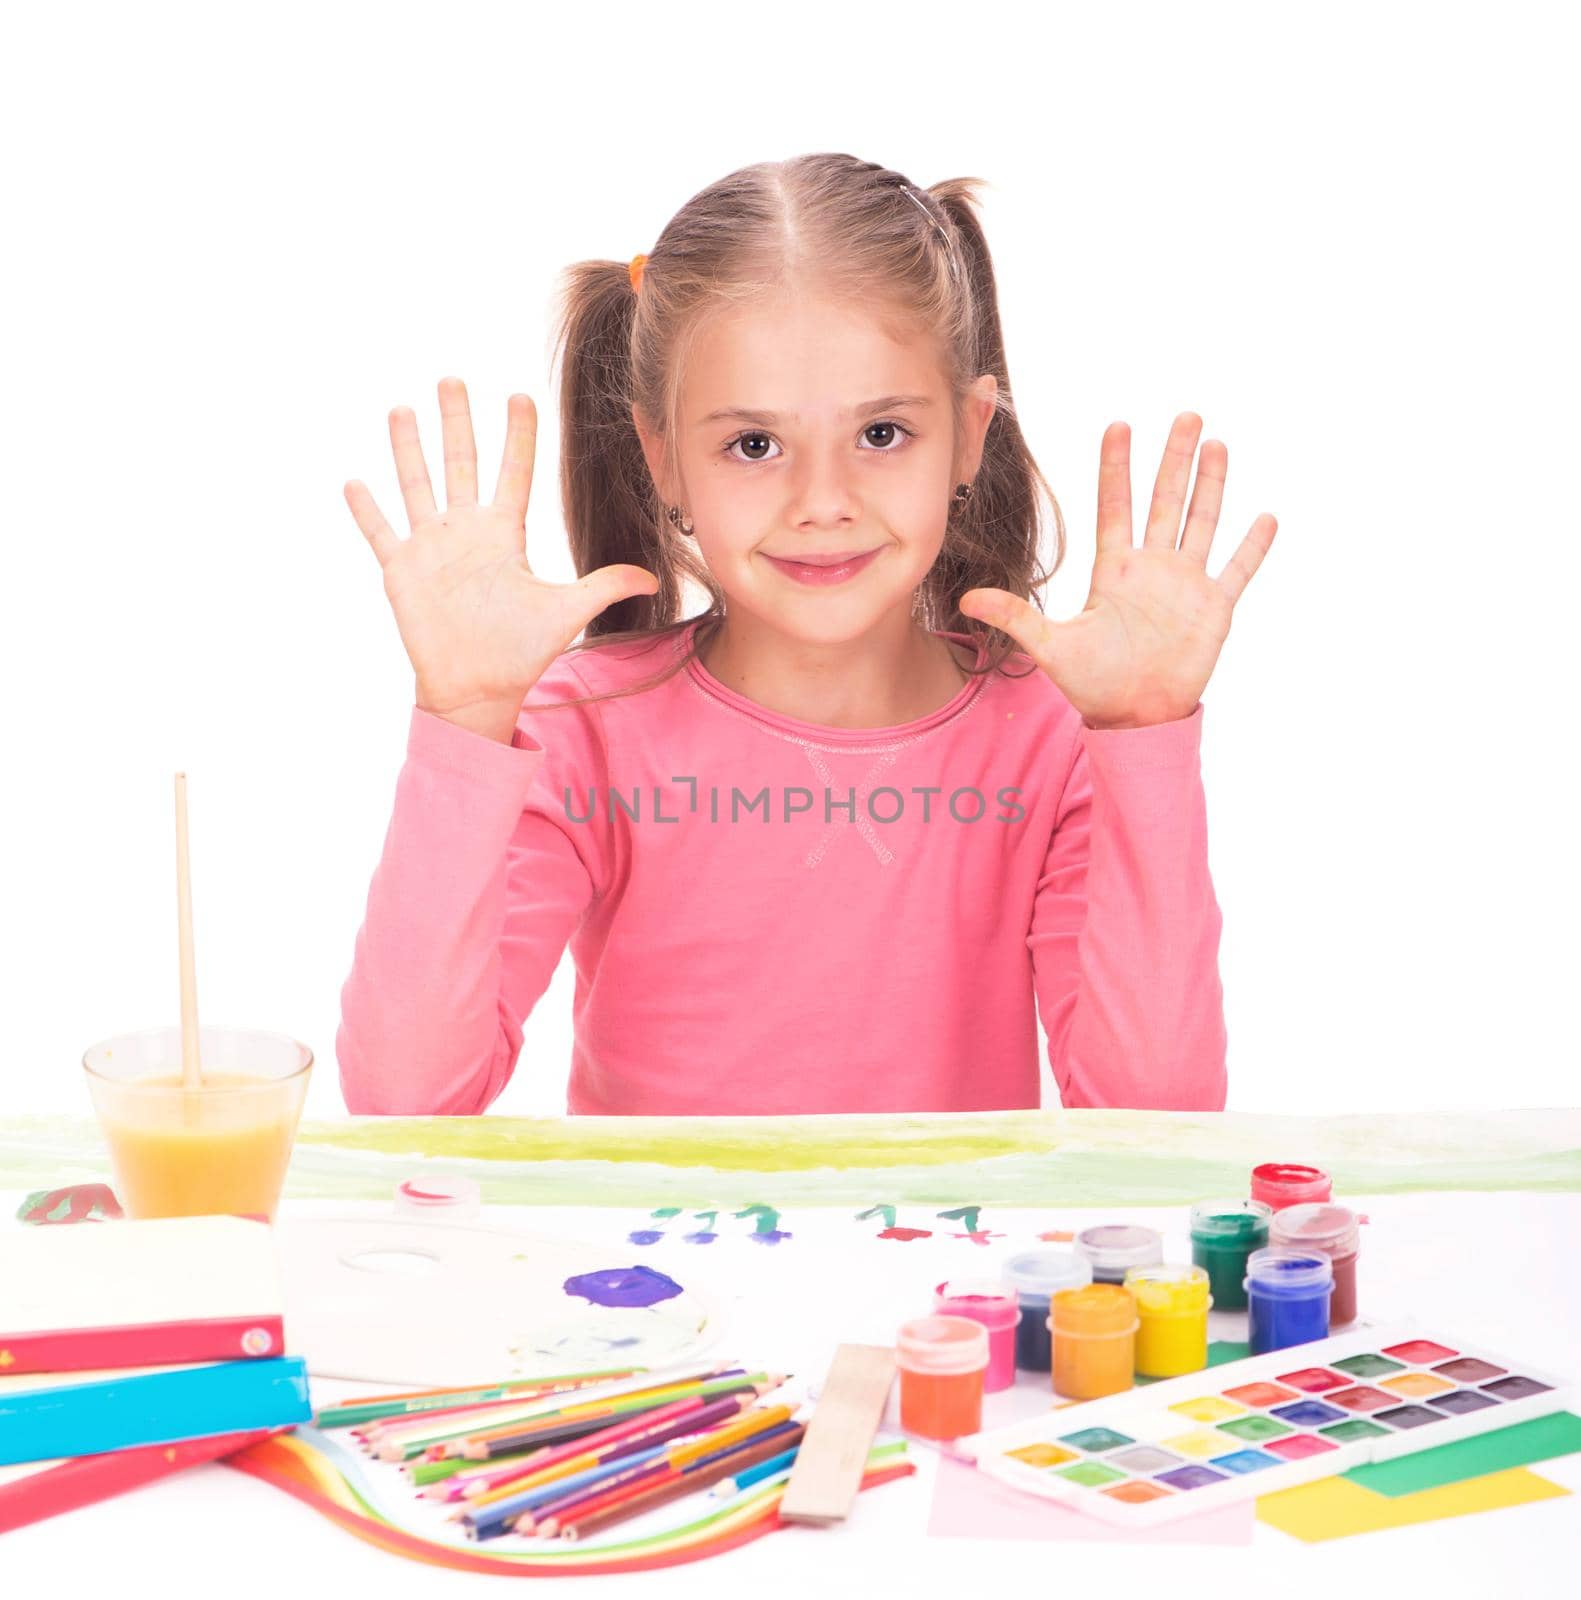 The child, a little girl draws paints